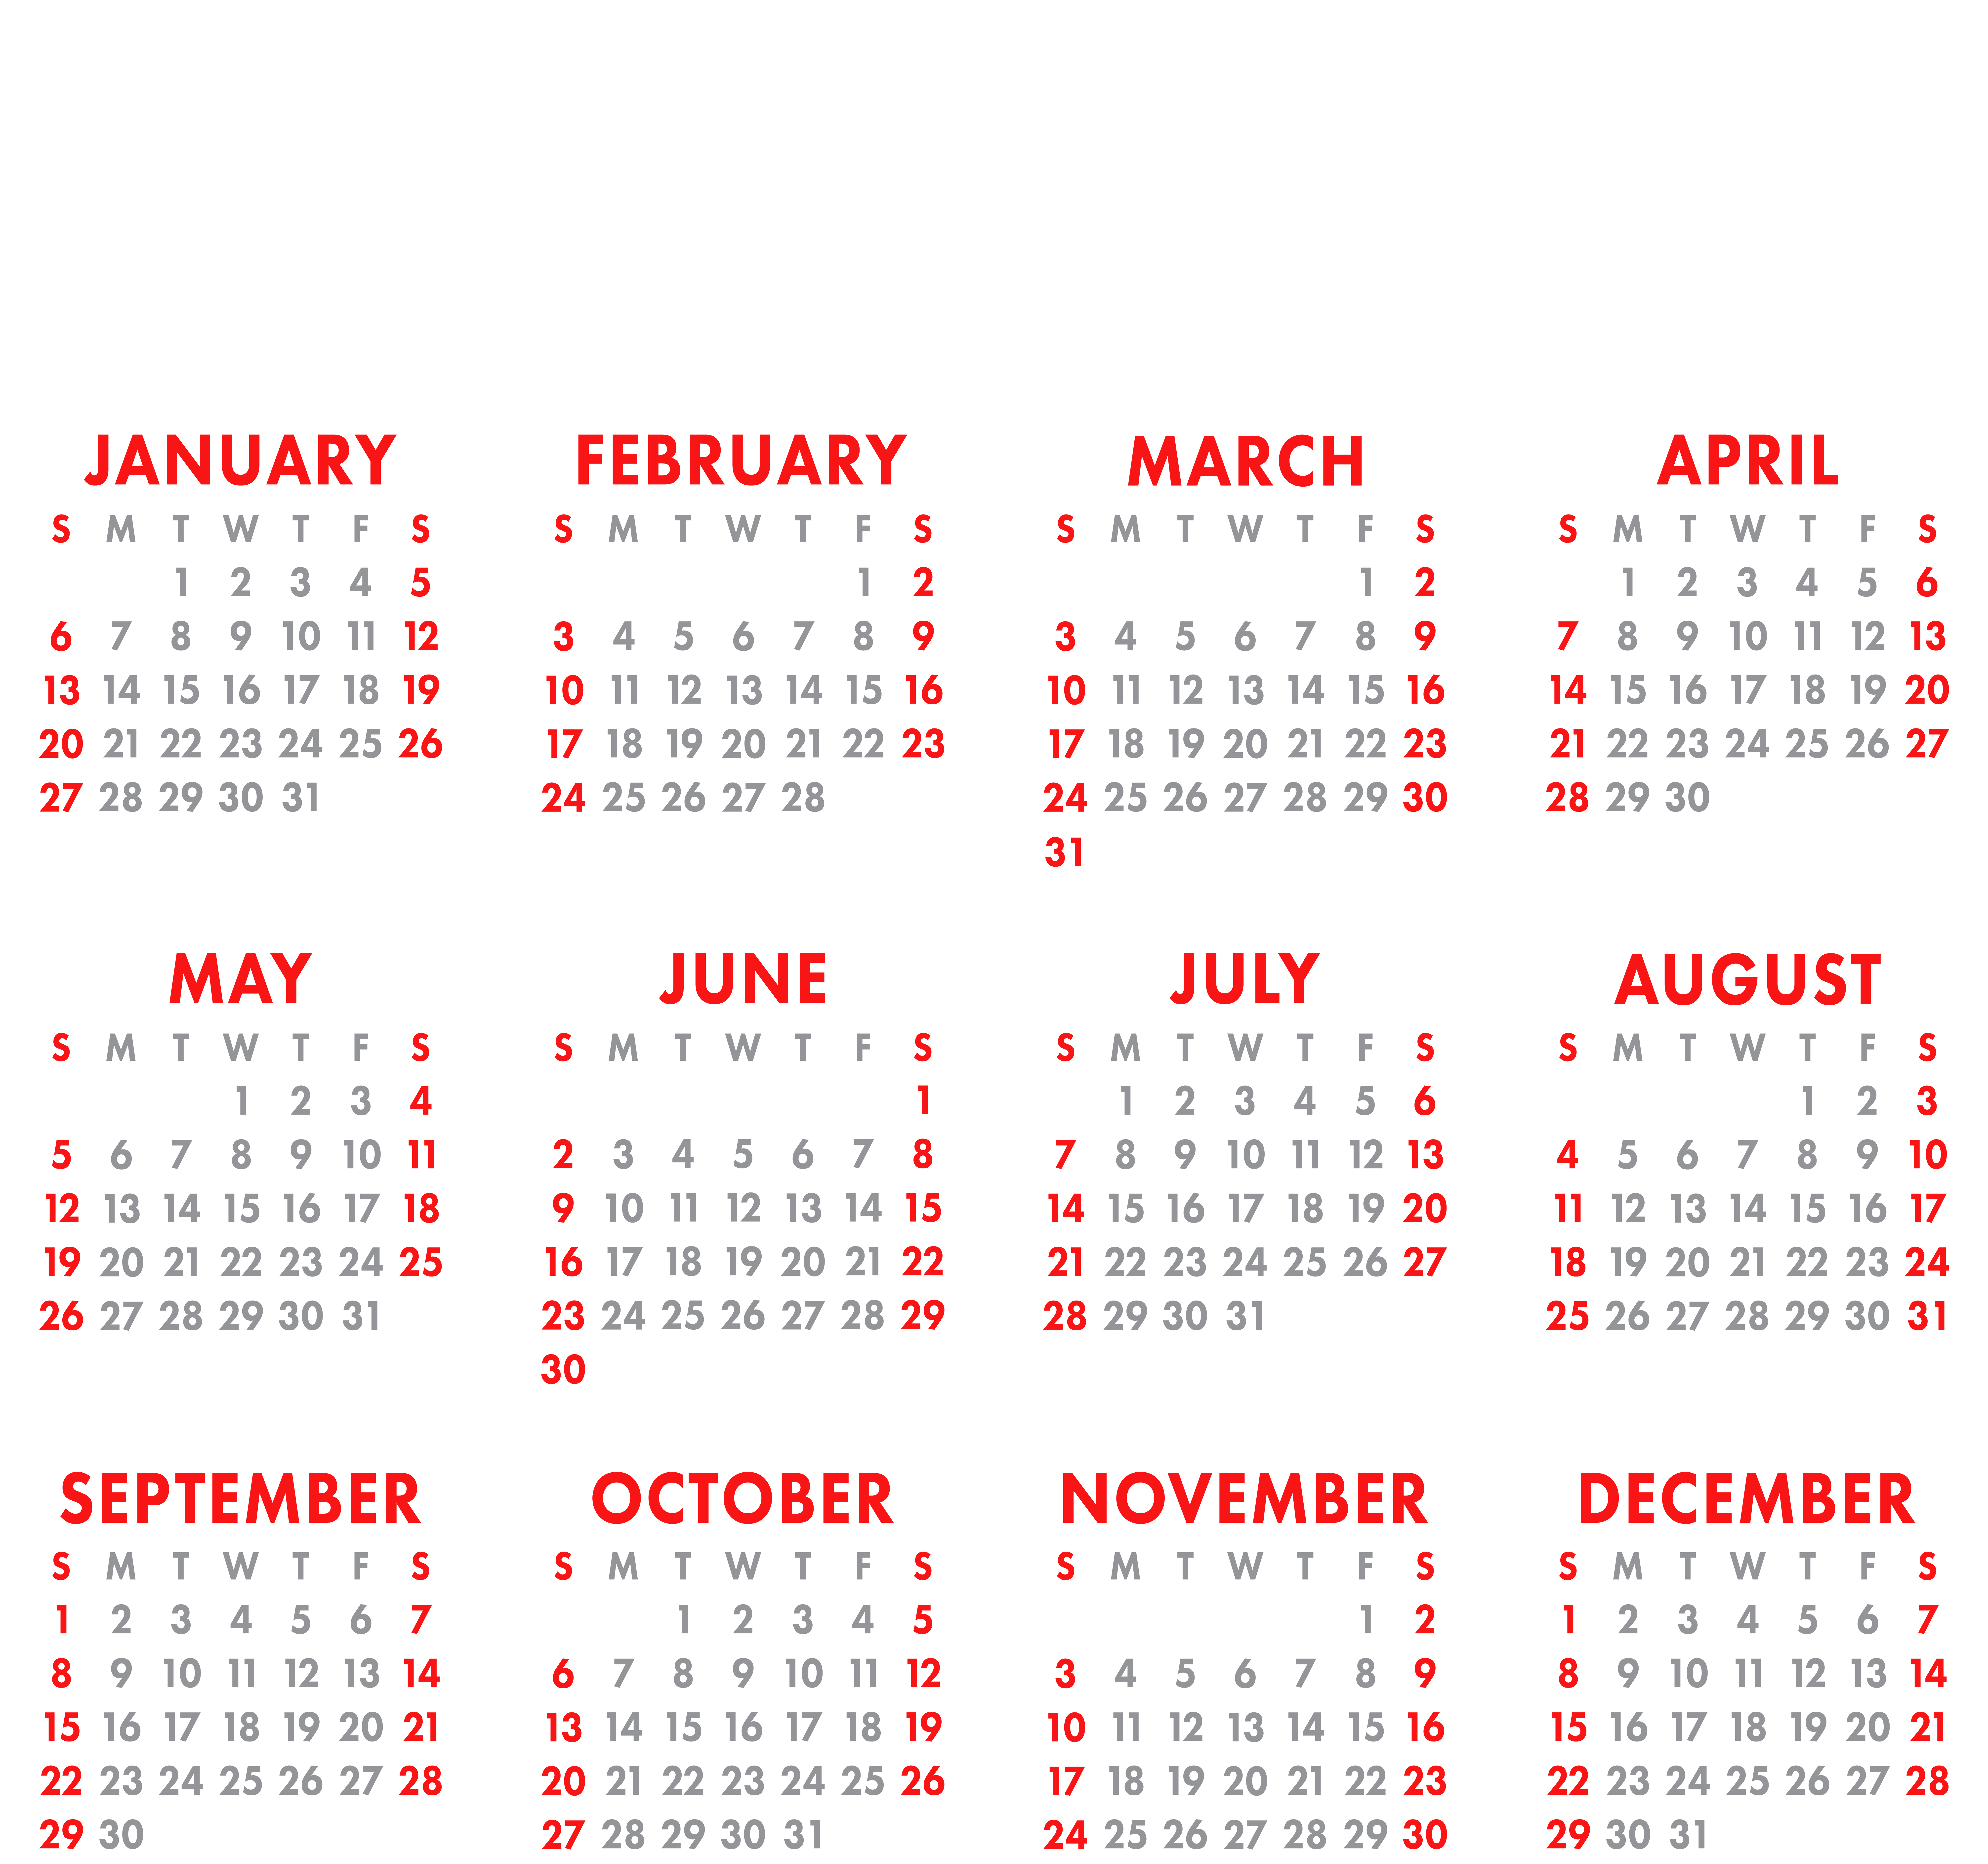 2019 Calendar Png Image File Png All - Bank2home.com